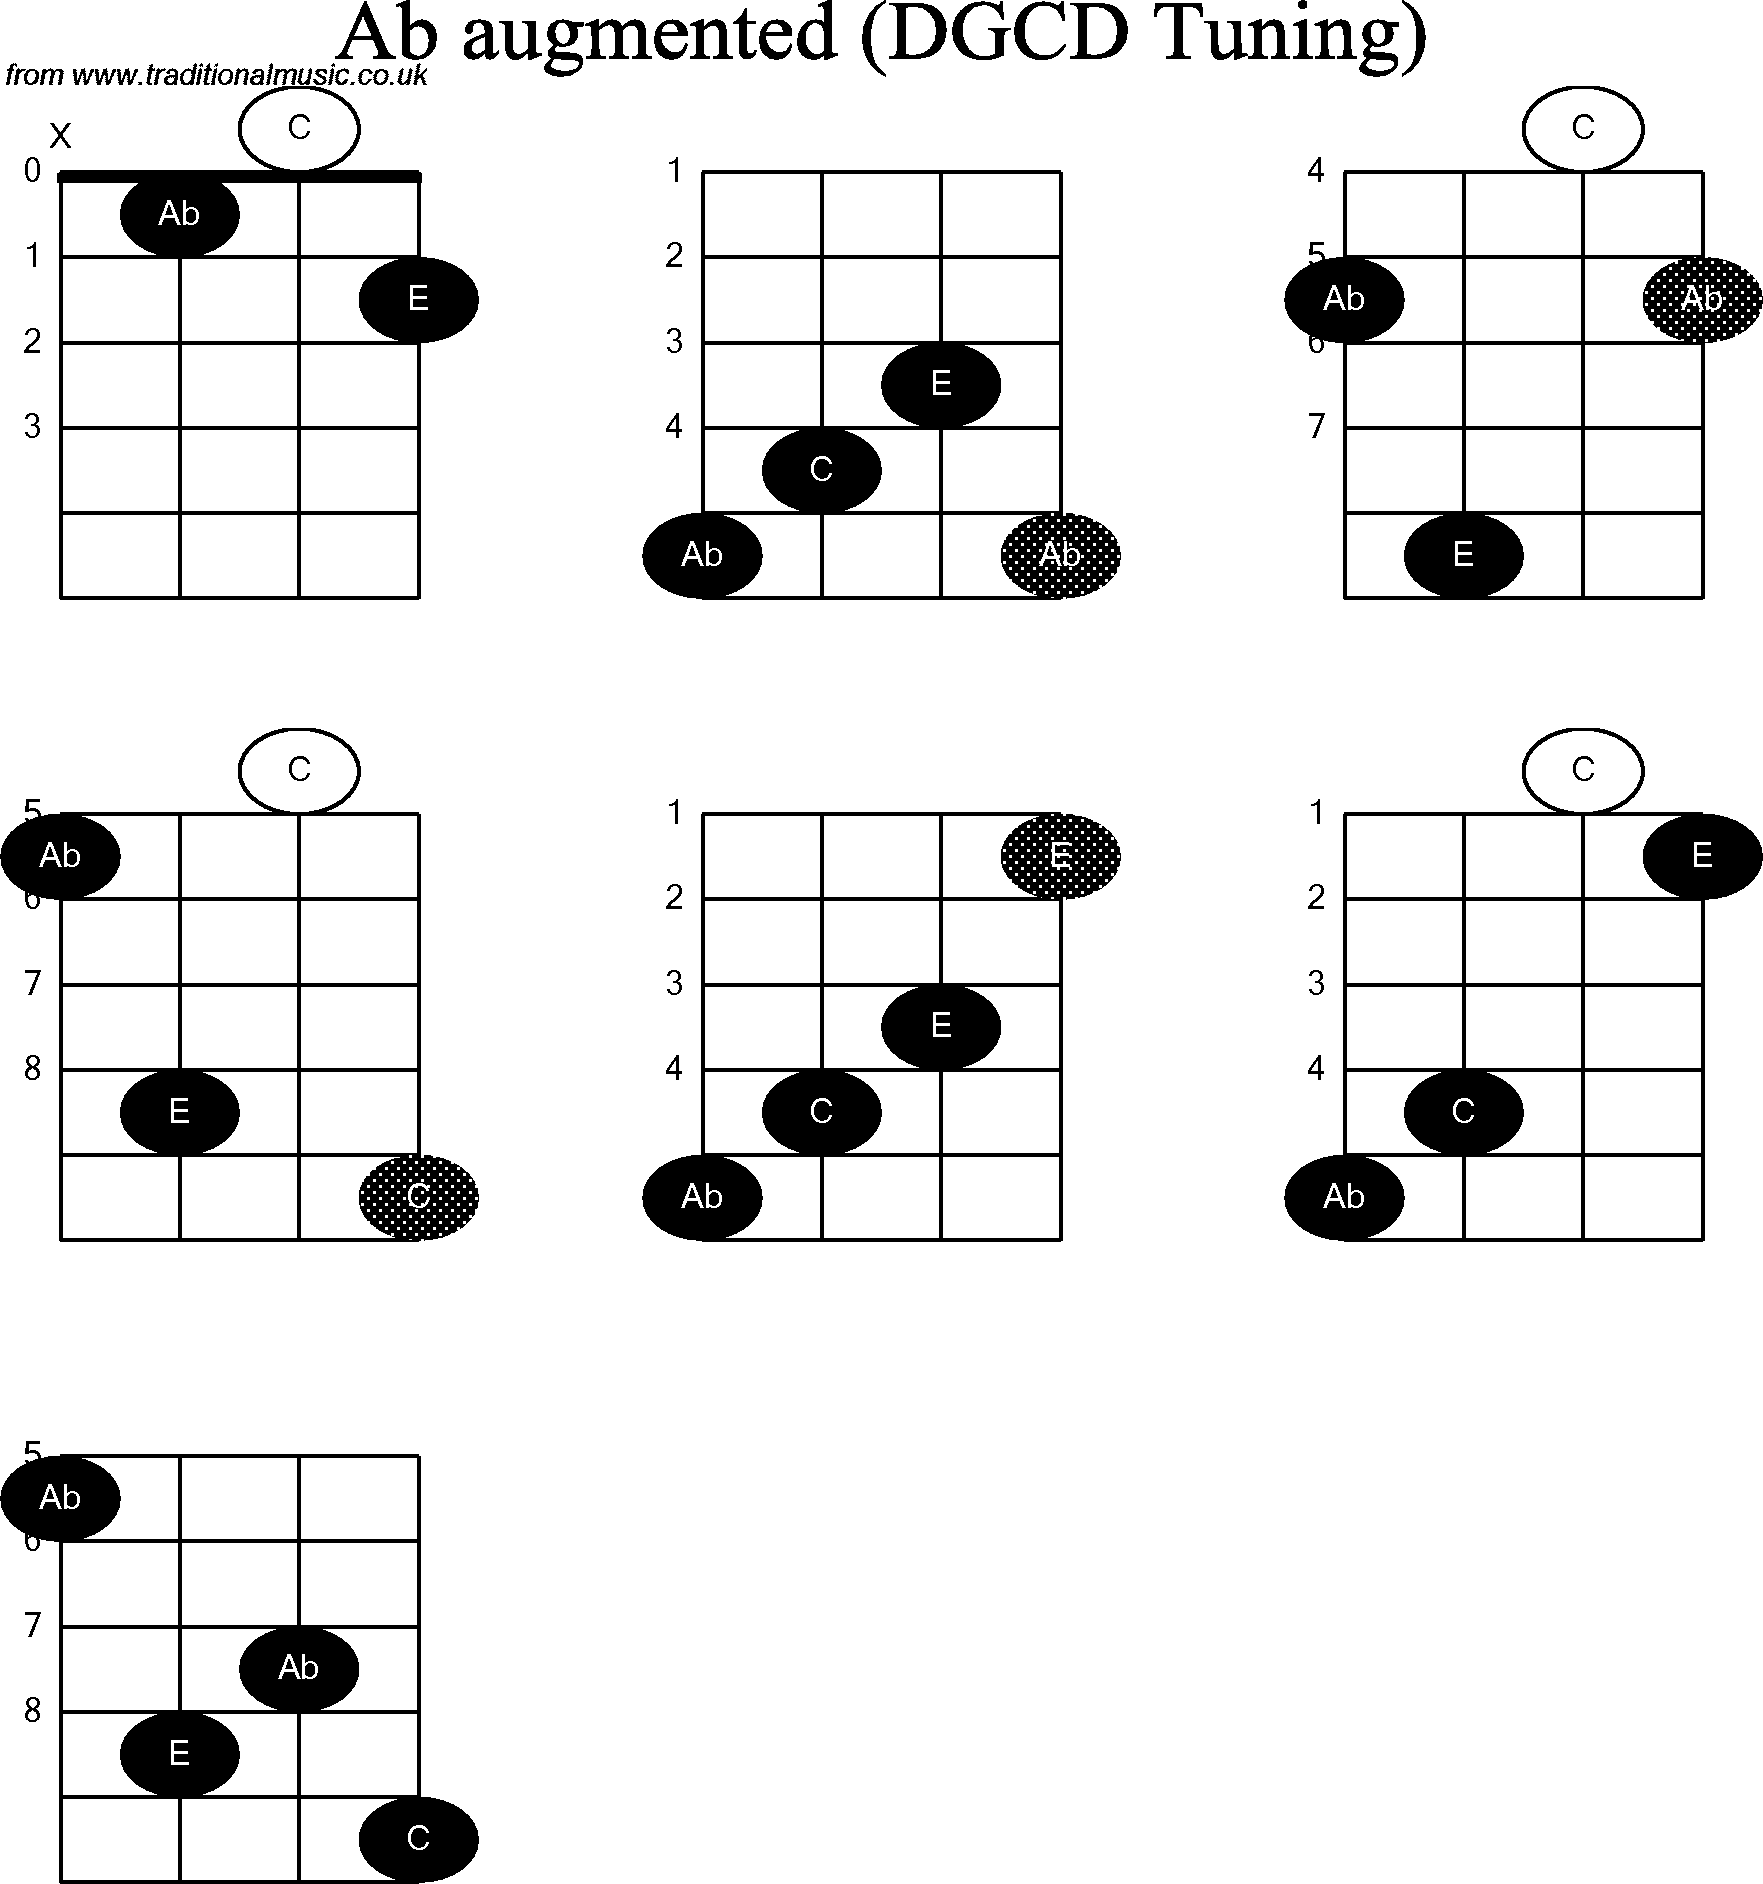 Chord diagrams for Banjo(G Modal) Ab Augmented